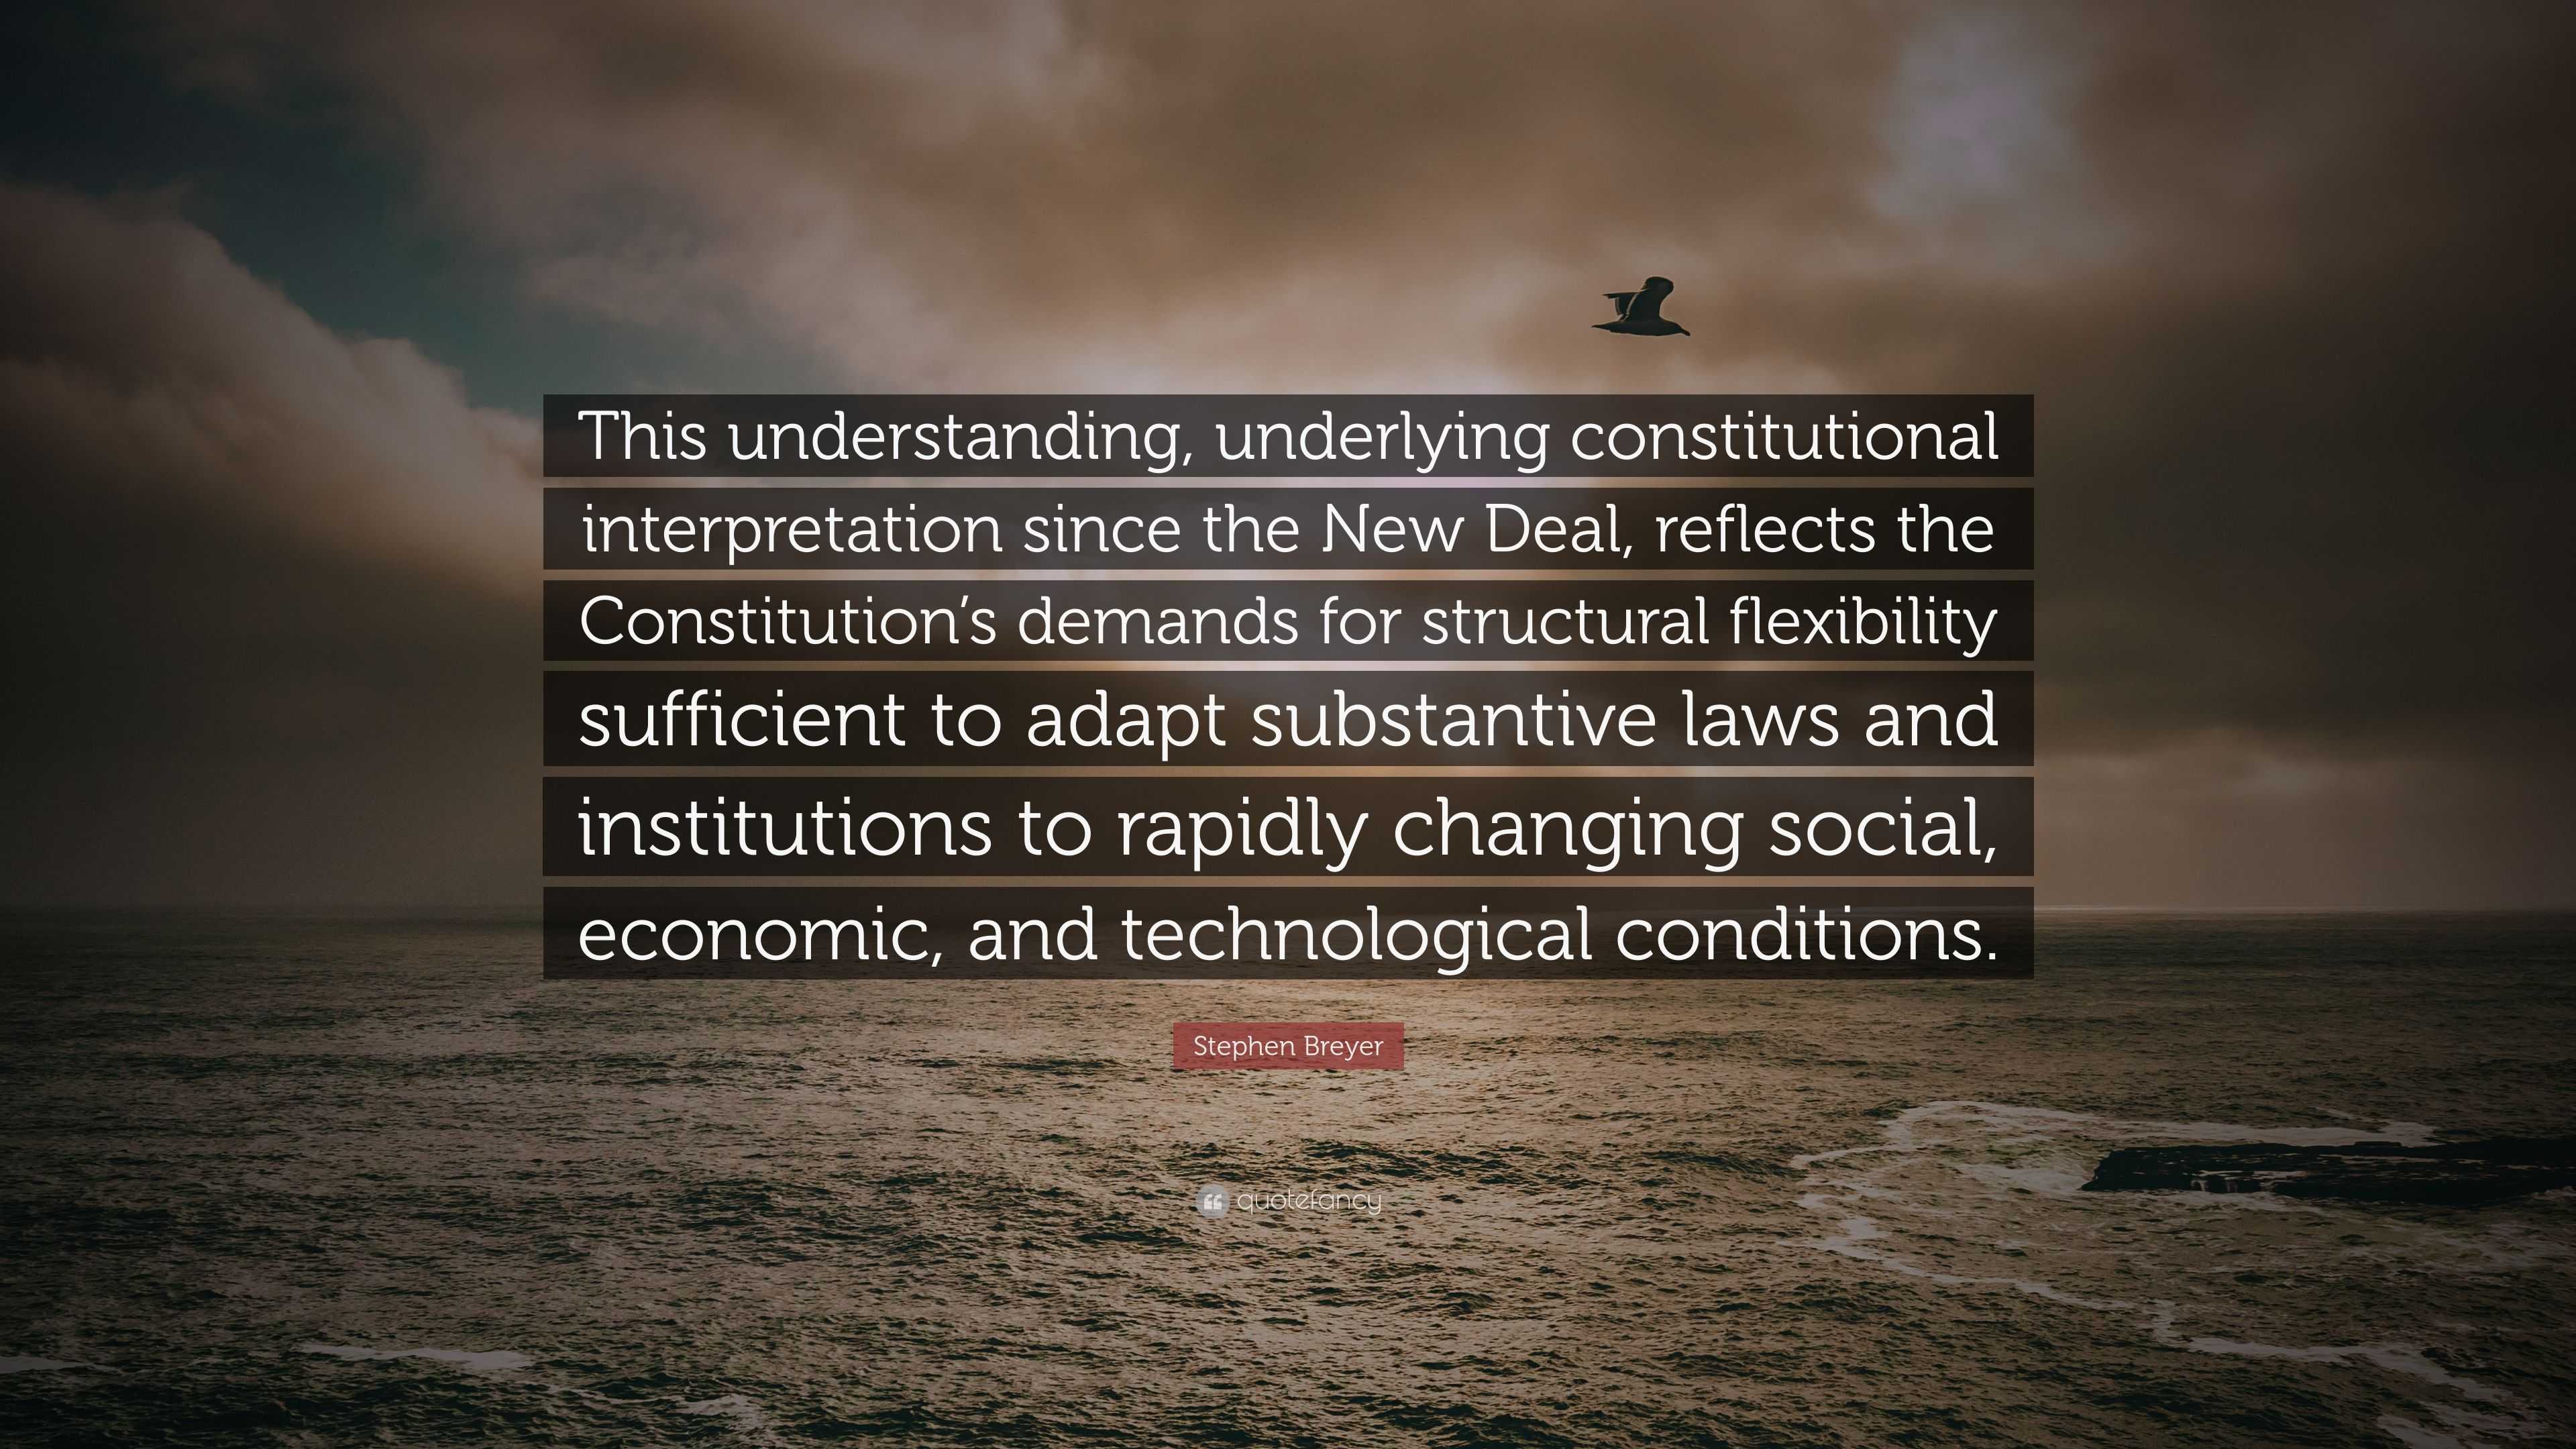 Stephen Breyer Quote: “This understanding, underlying constitutional